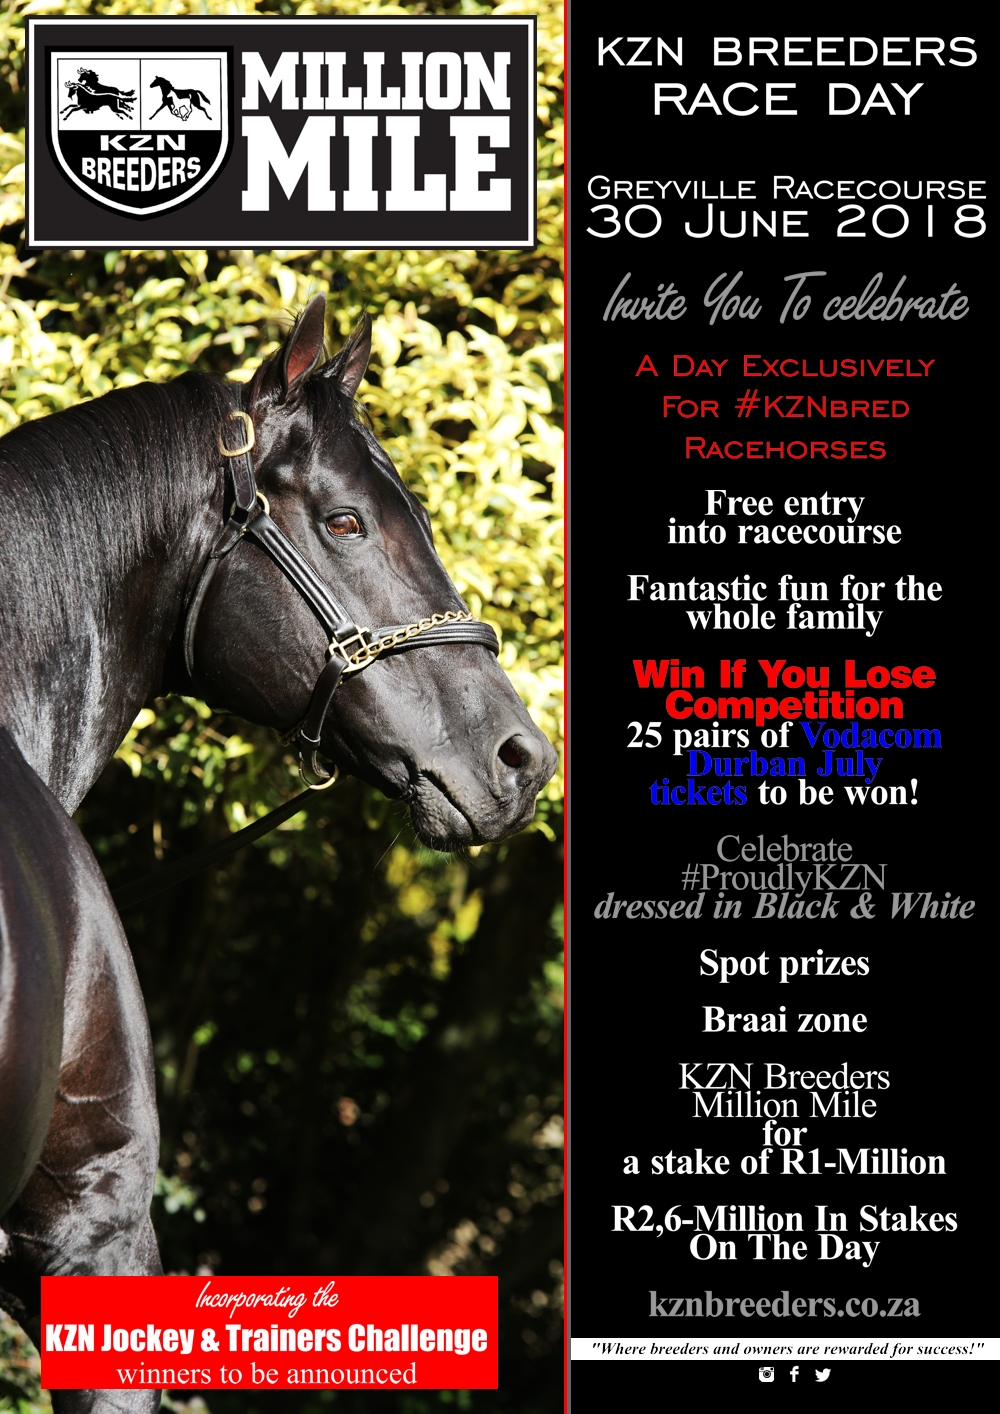 KZN Breeders Race Day – 30 June Greyville Racecourse